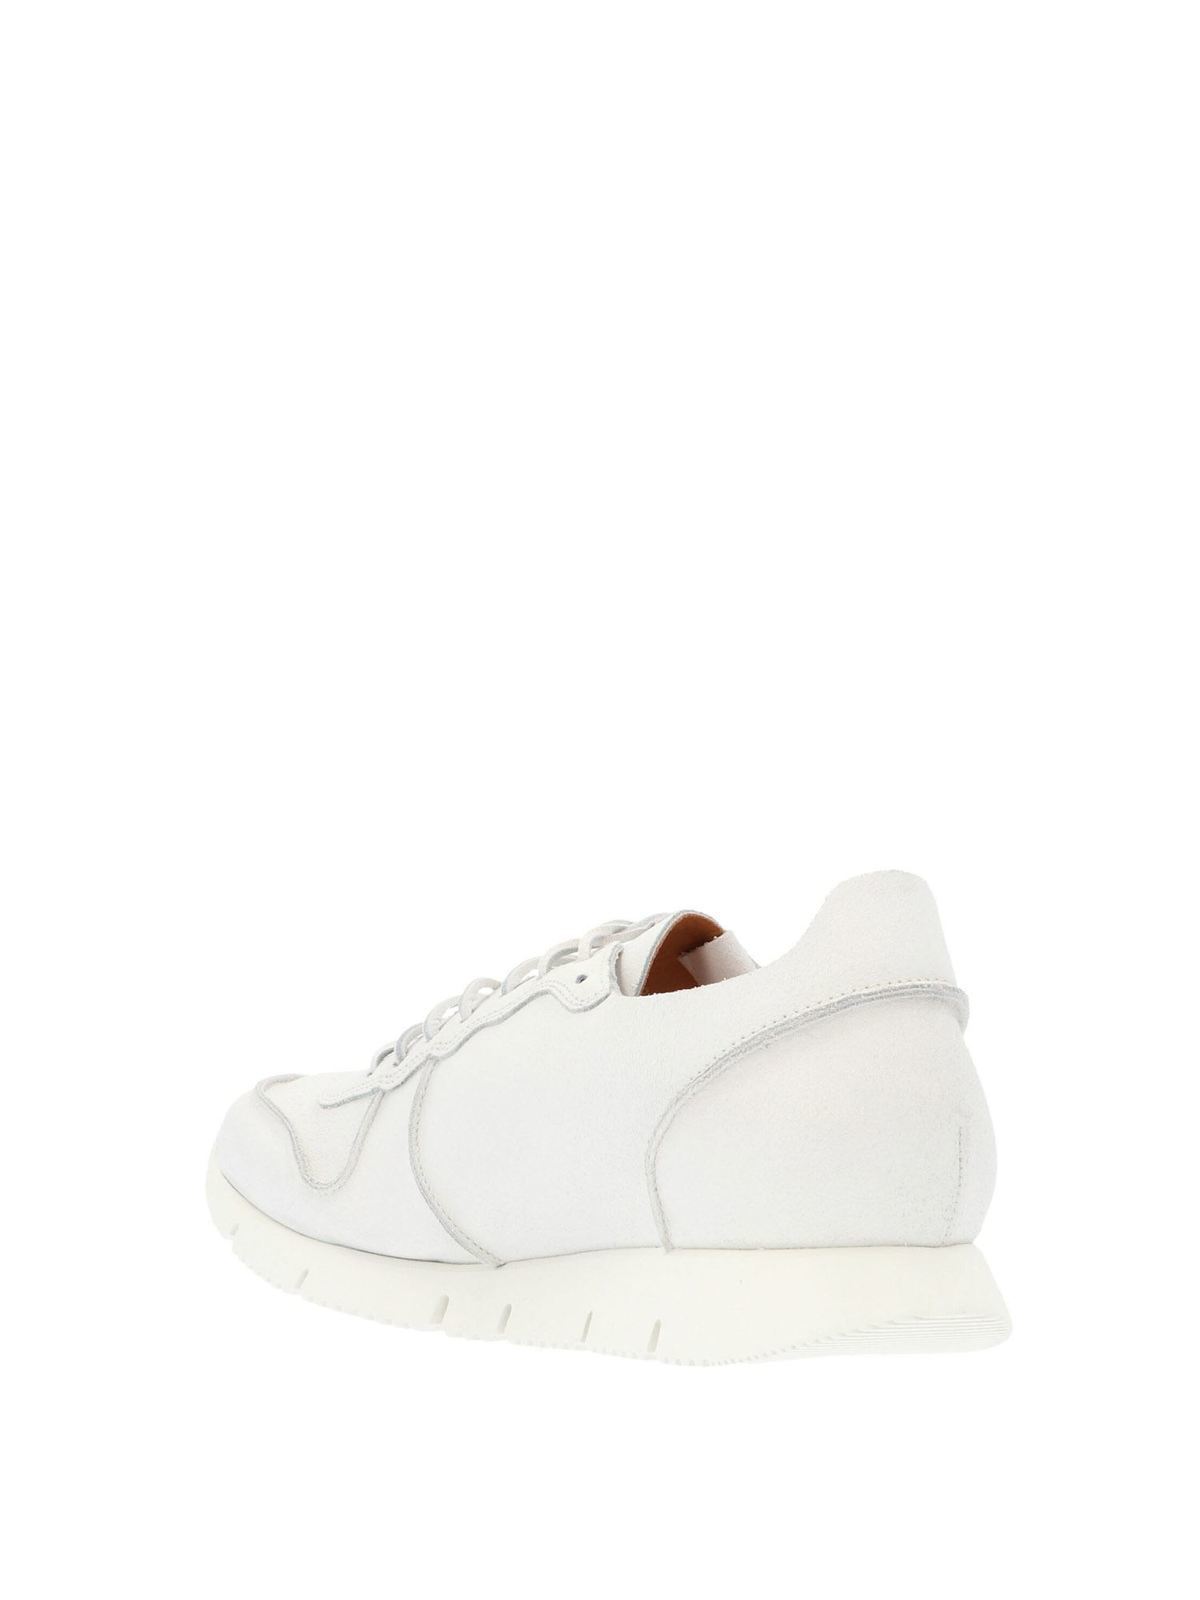 Buttero - Carrera sneakers in white - trainers - B5910BIAN03 | iKRIX.com